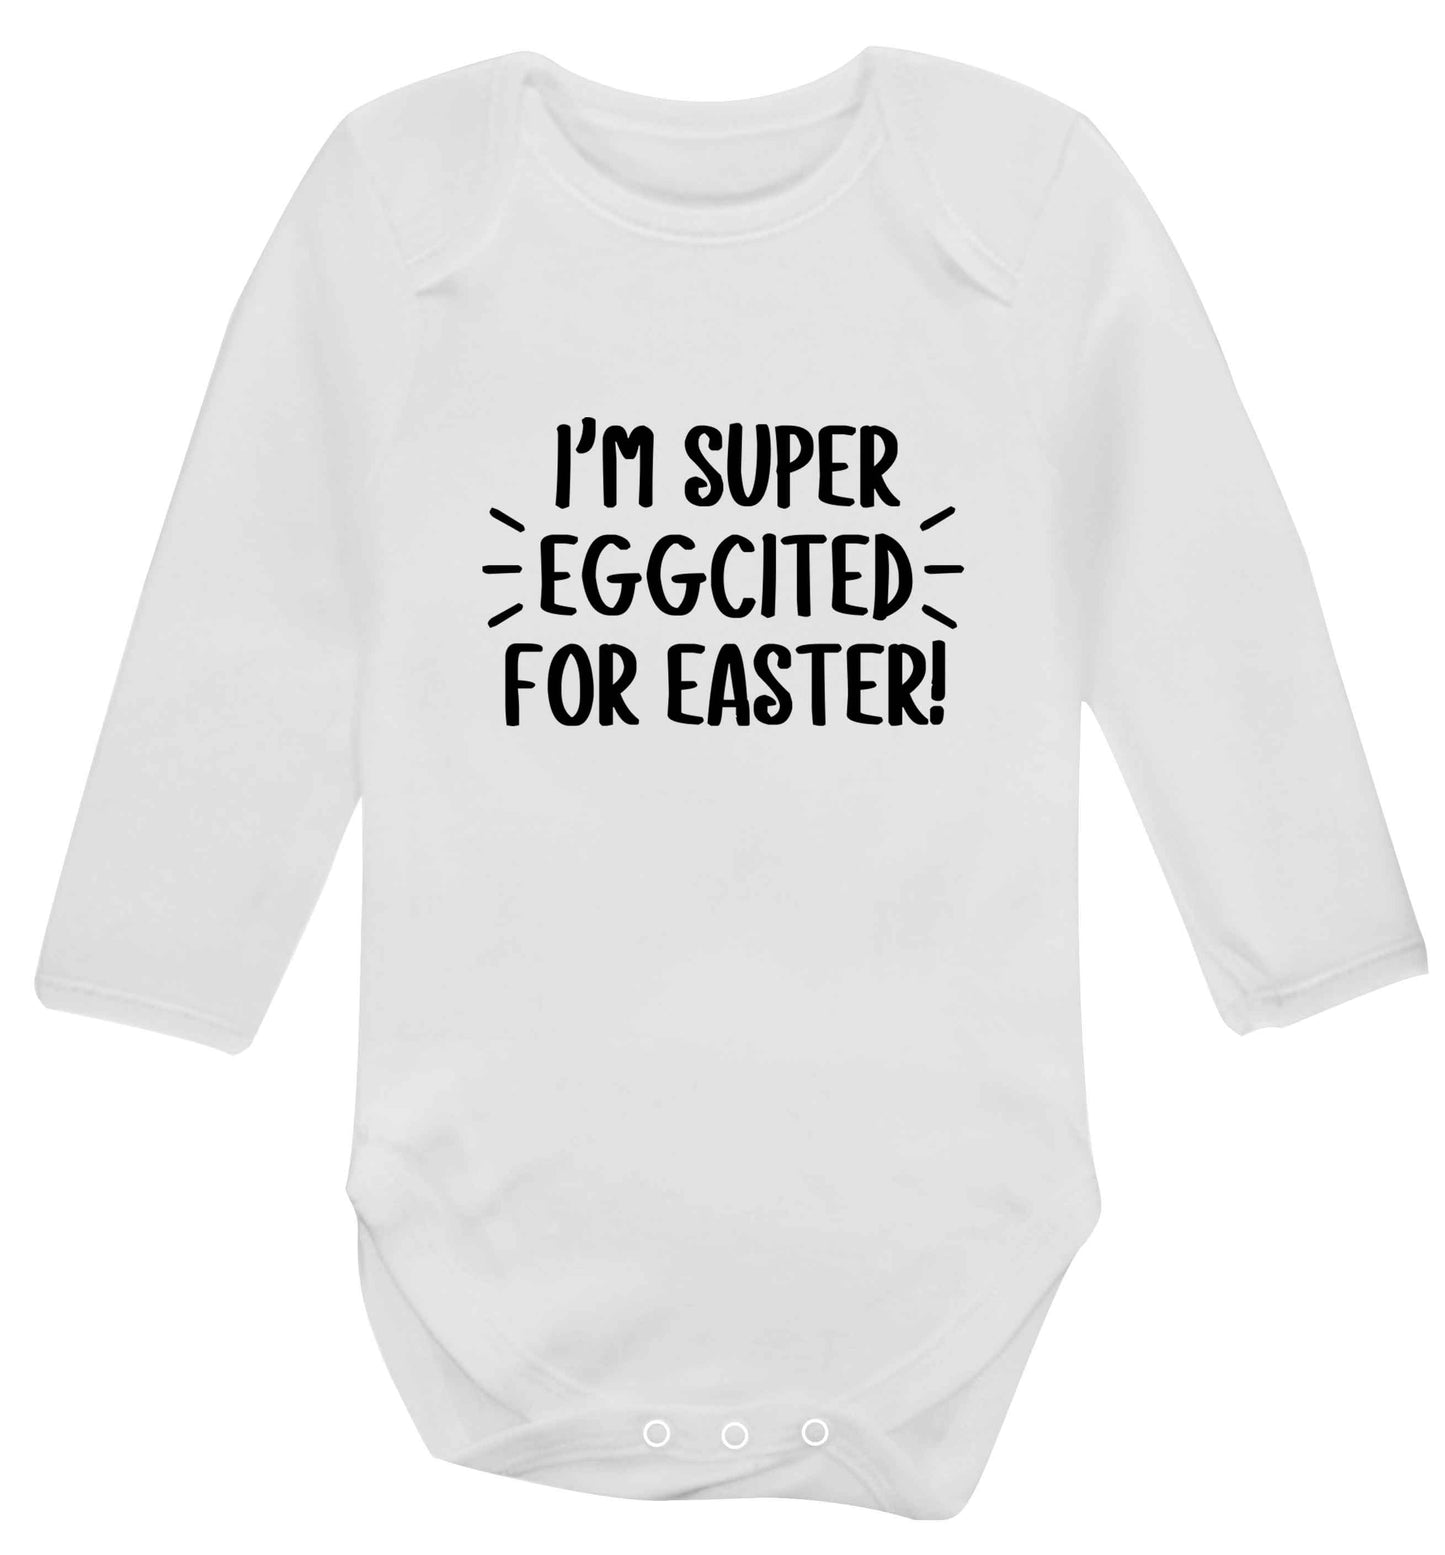 I'm super eggcited for Easter baby vest long sleeved white 6-12 months